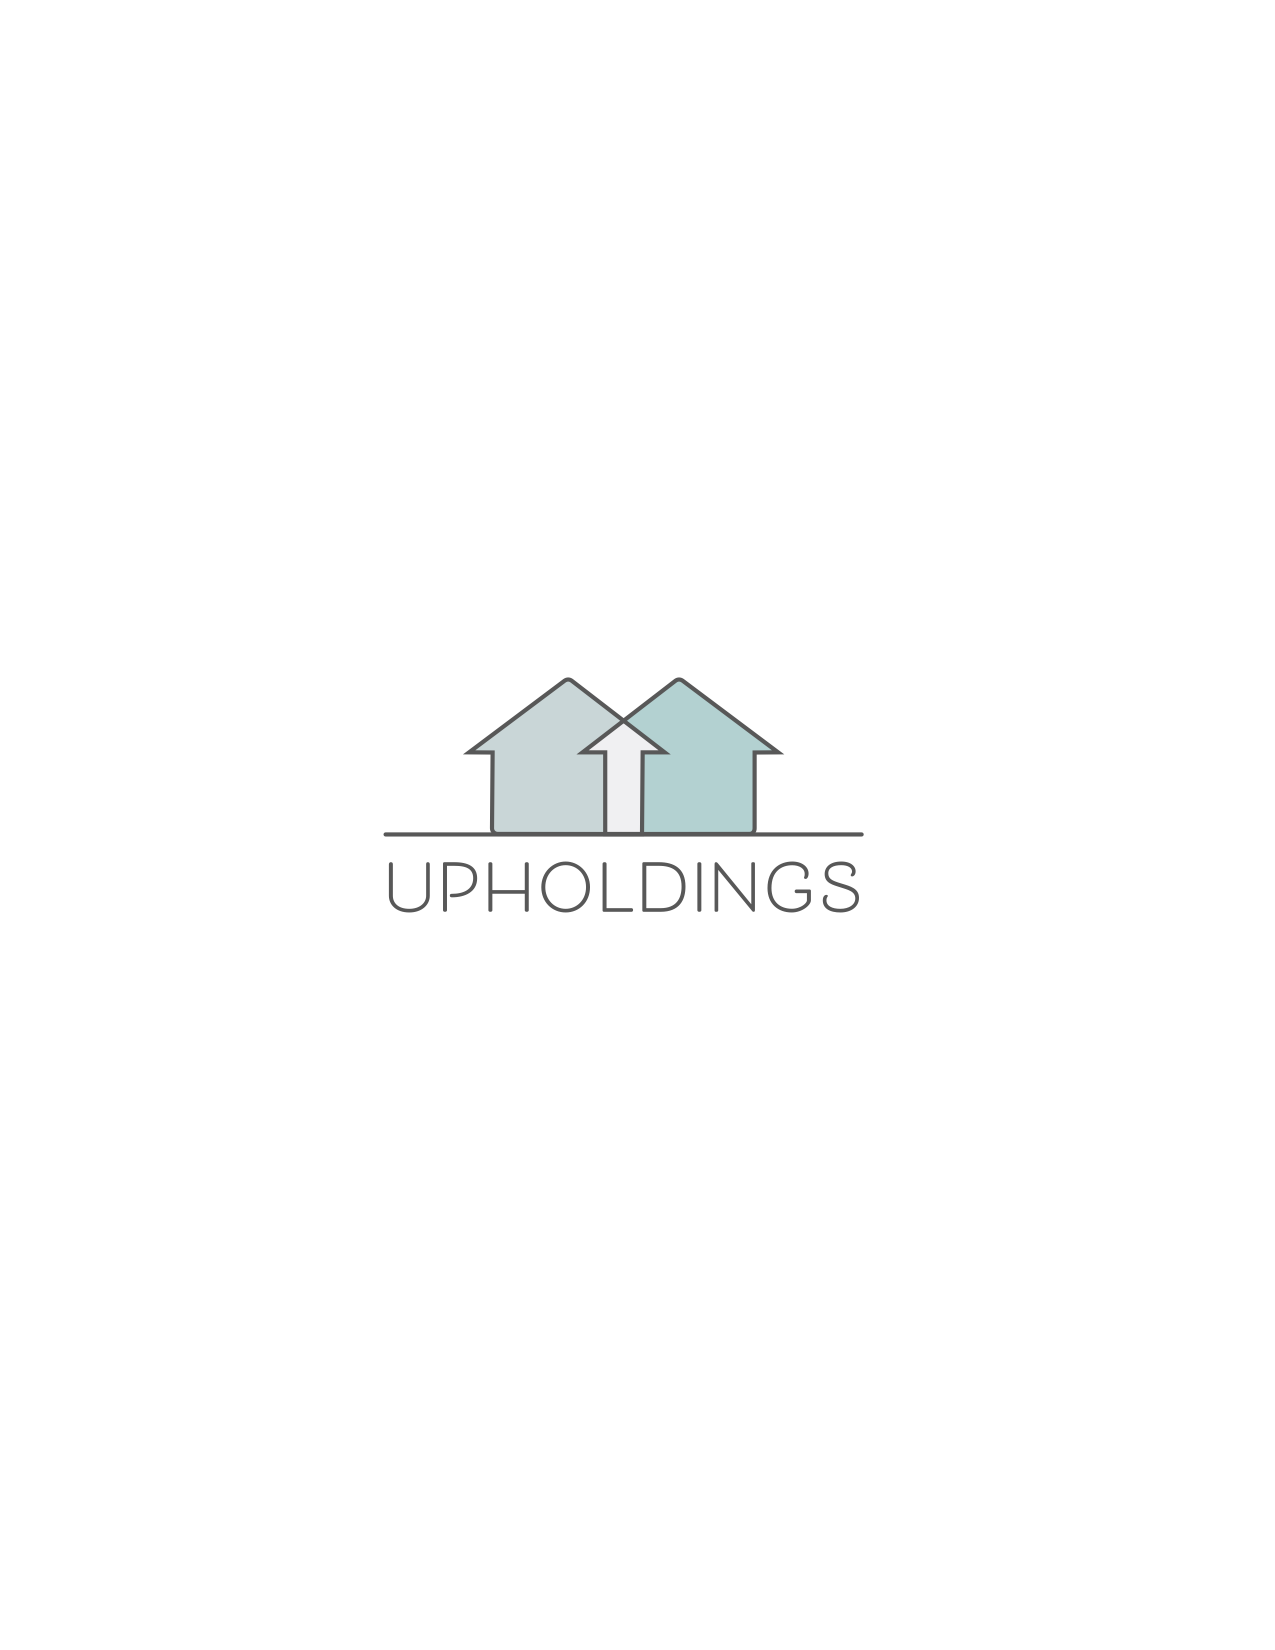 UP Holdings LLC company logo